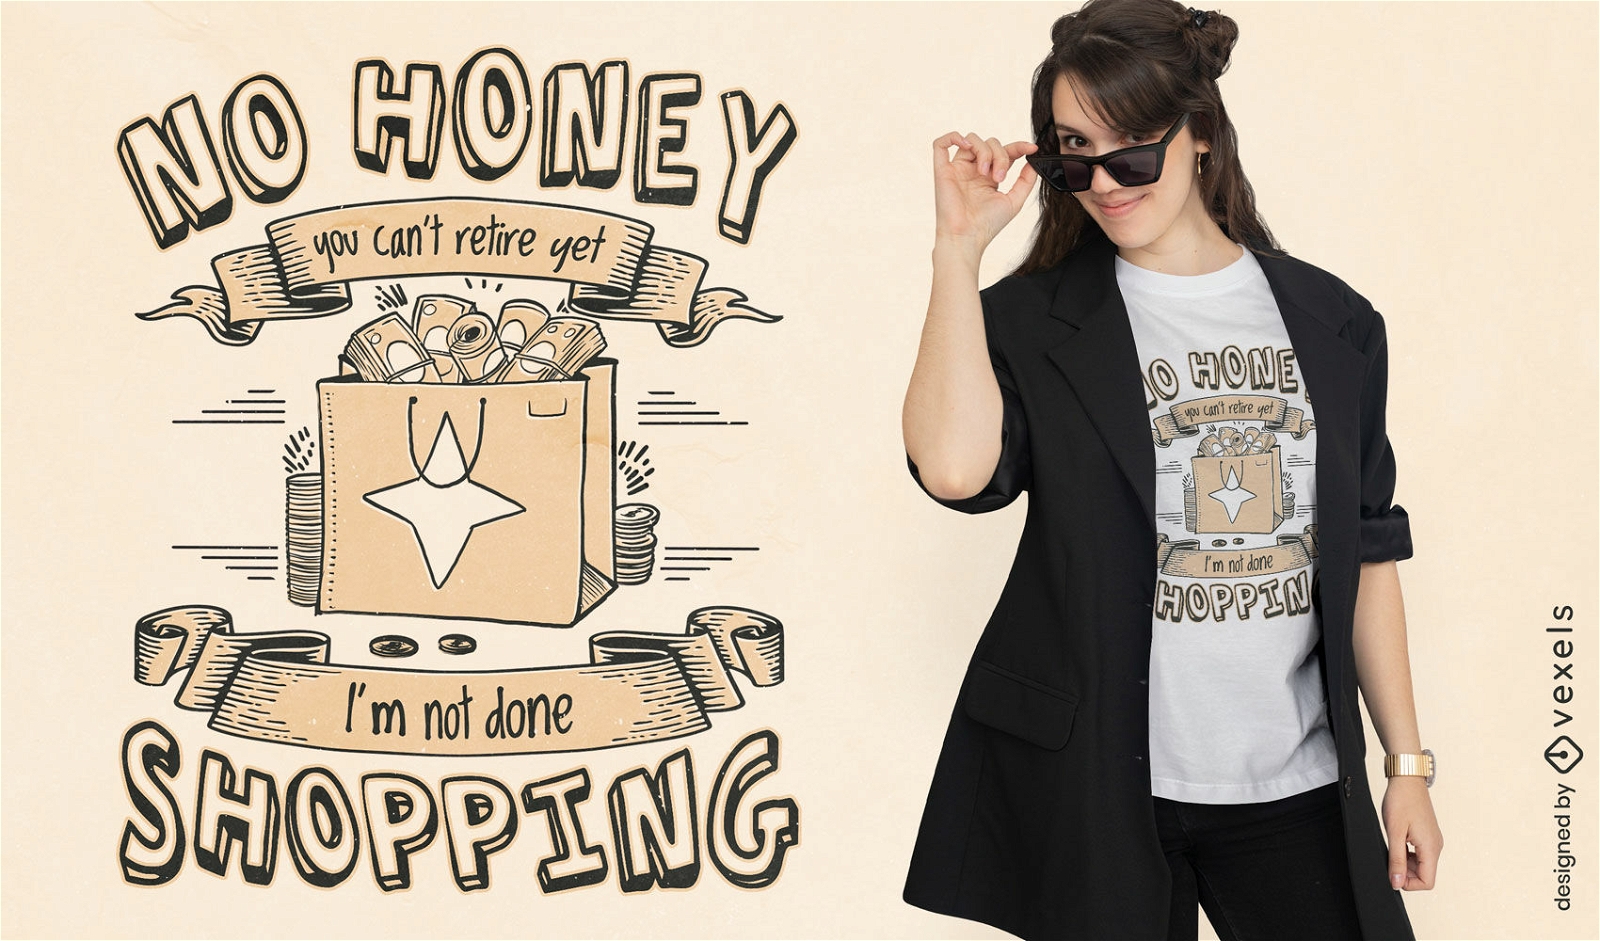 Funny shoppping addiction t-shirt design